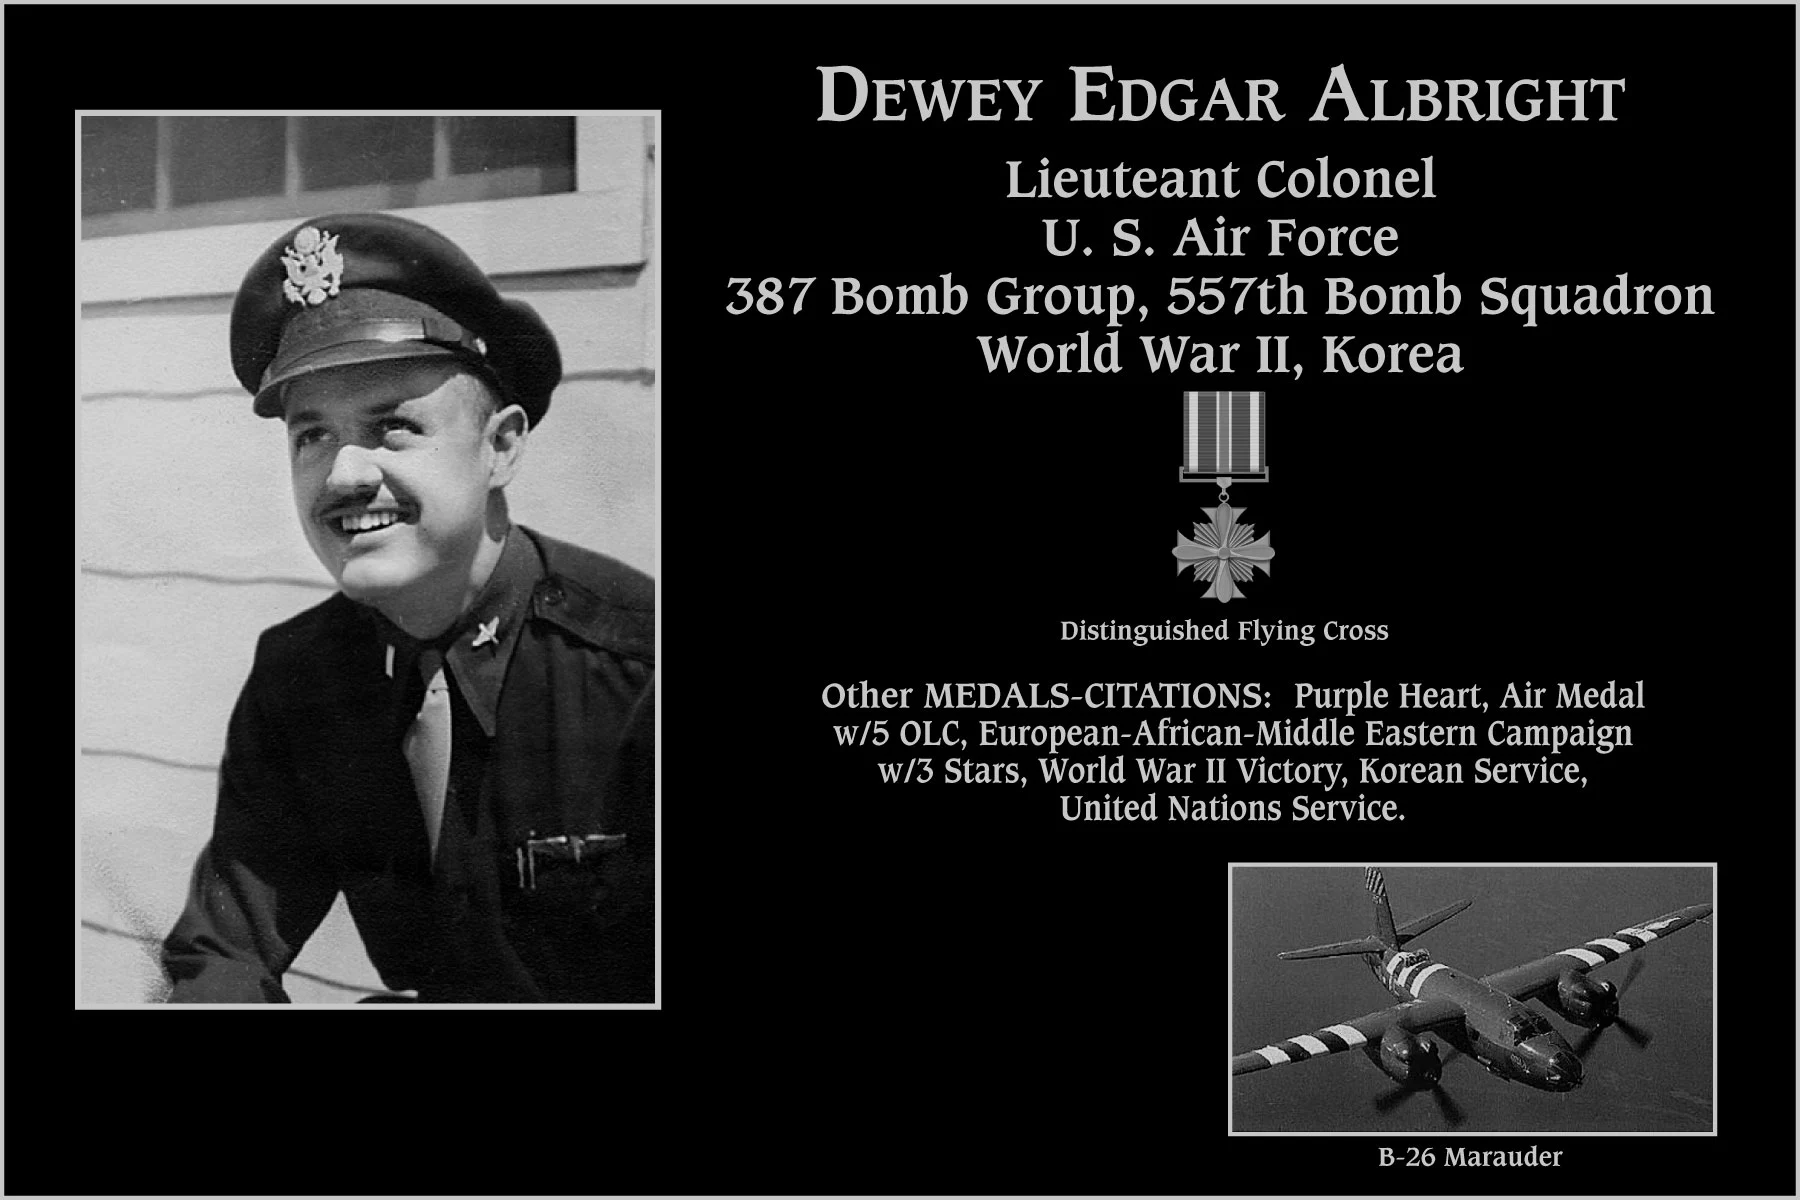 Dewey Edgar Albright